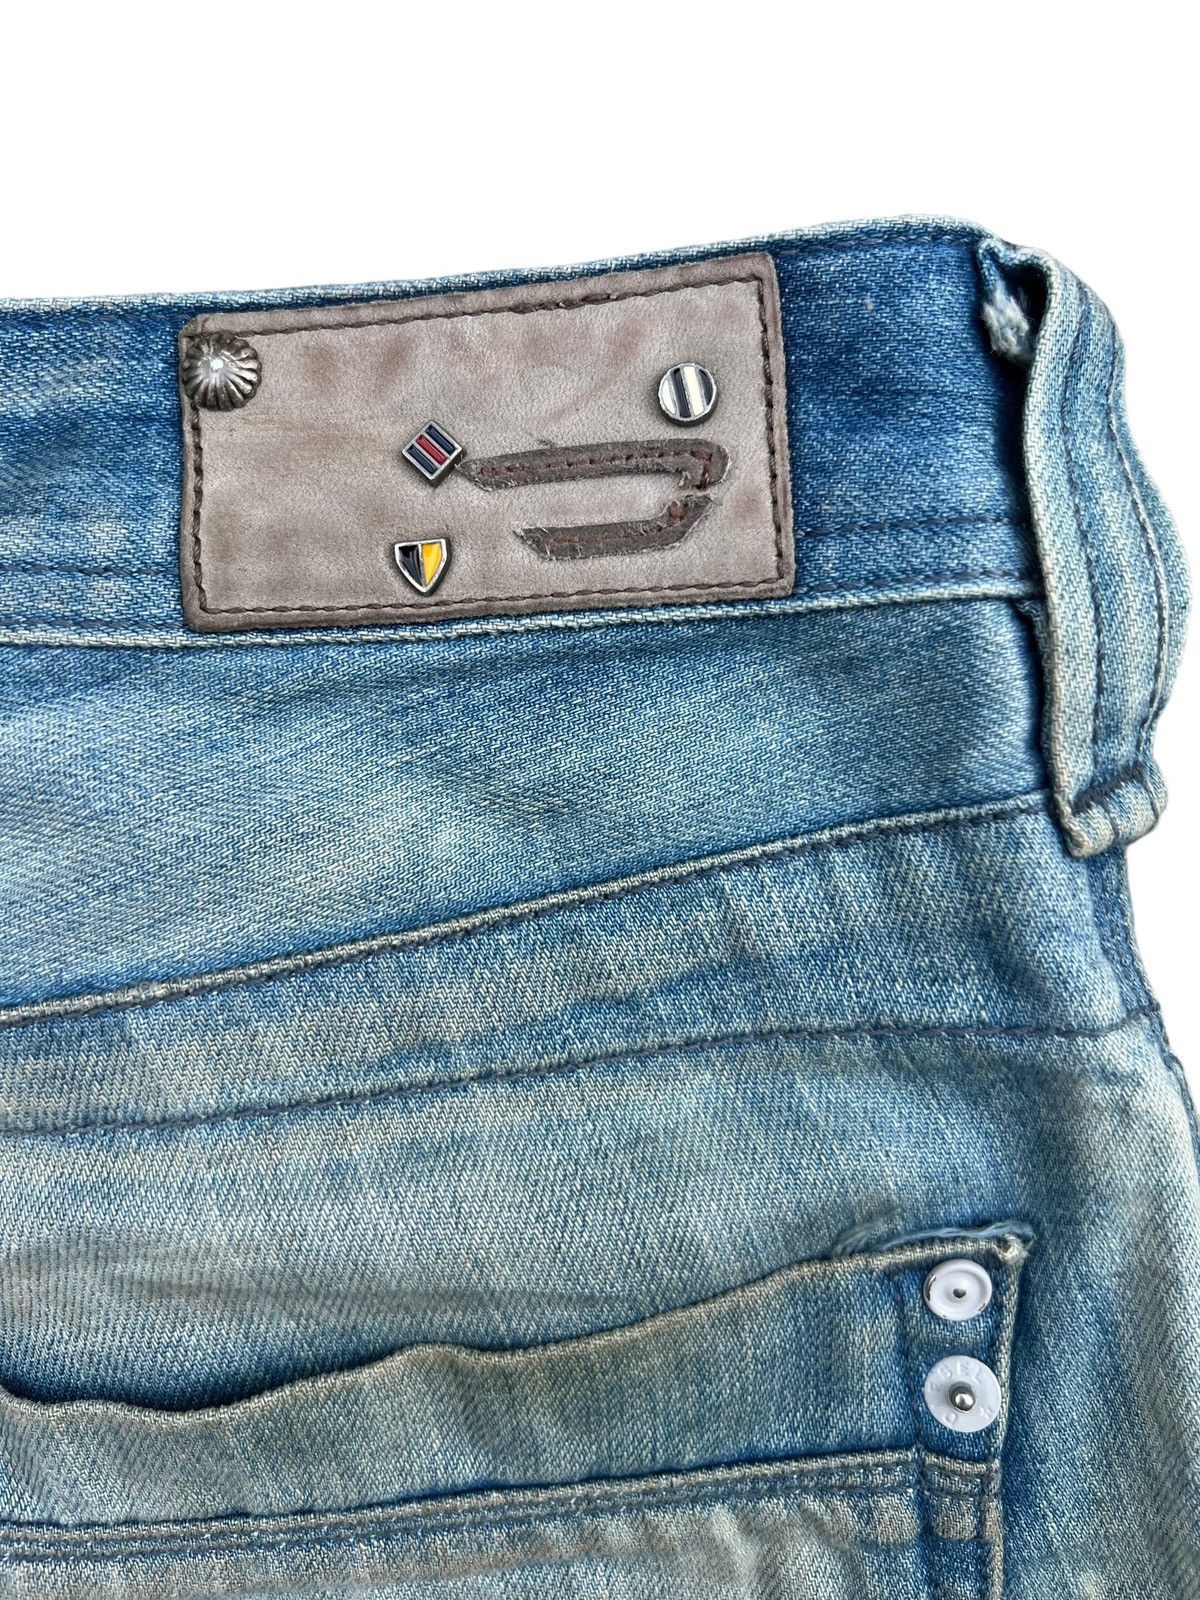 Vintage Diesel Leather Faded Distressed Denim Jeans 32x31 - 8